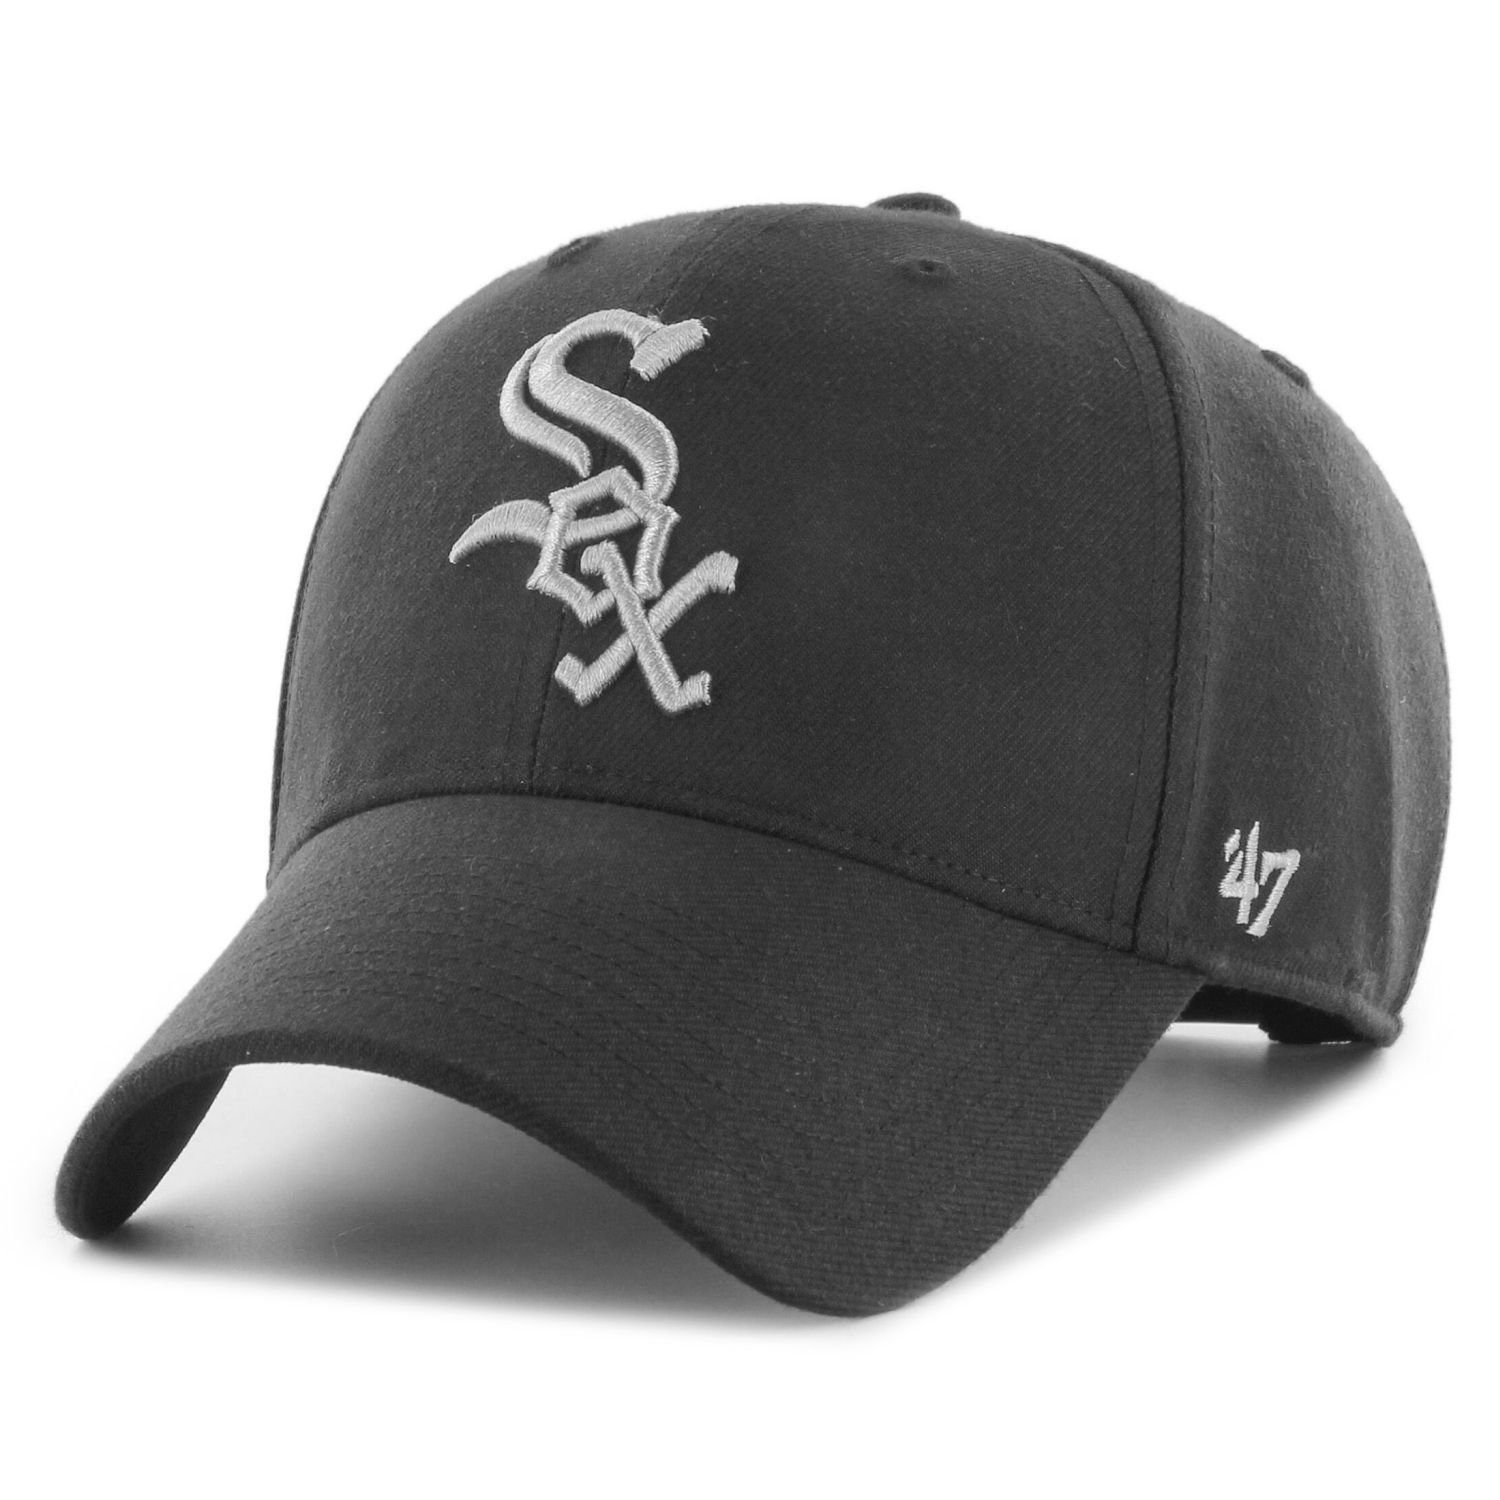 White Sox Brand '47 Snapback Cap MLB Chicago